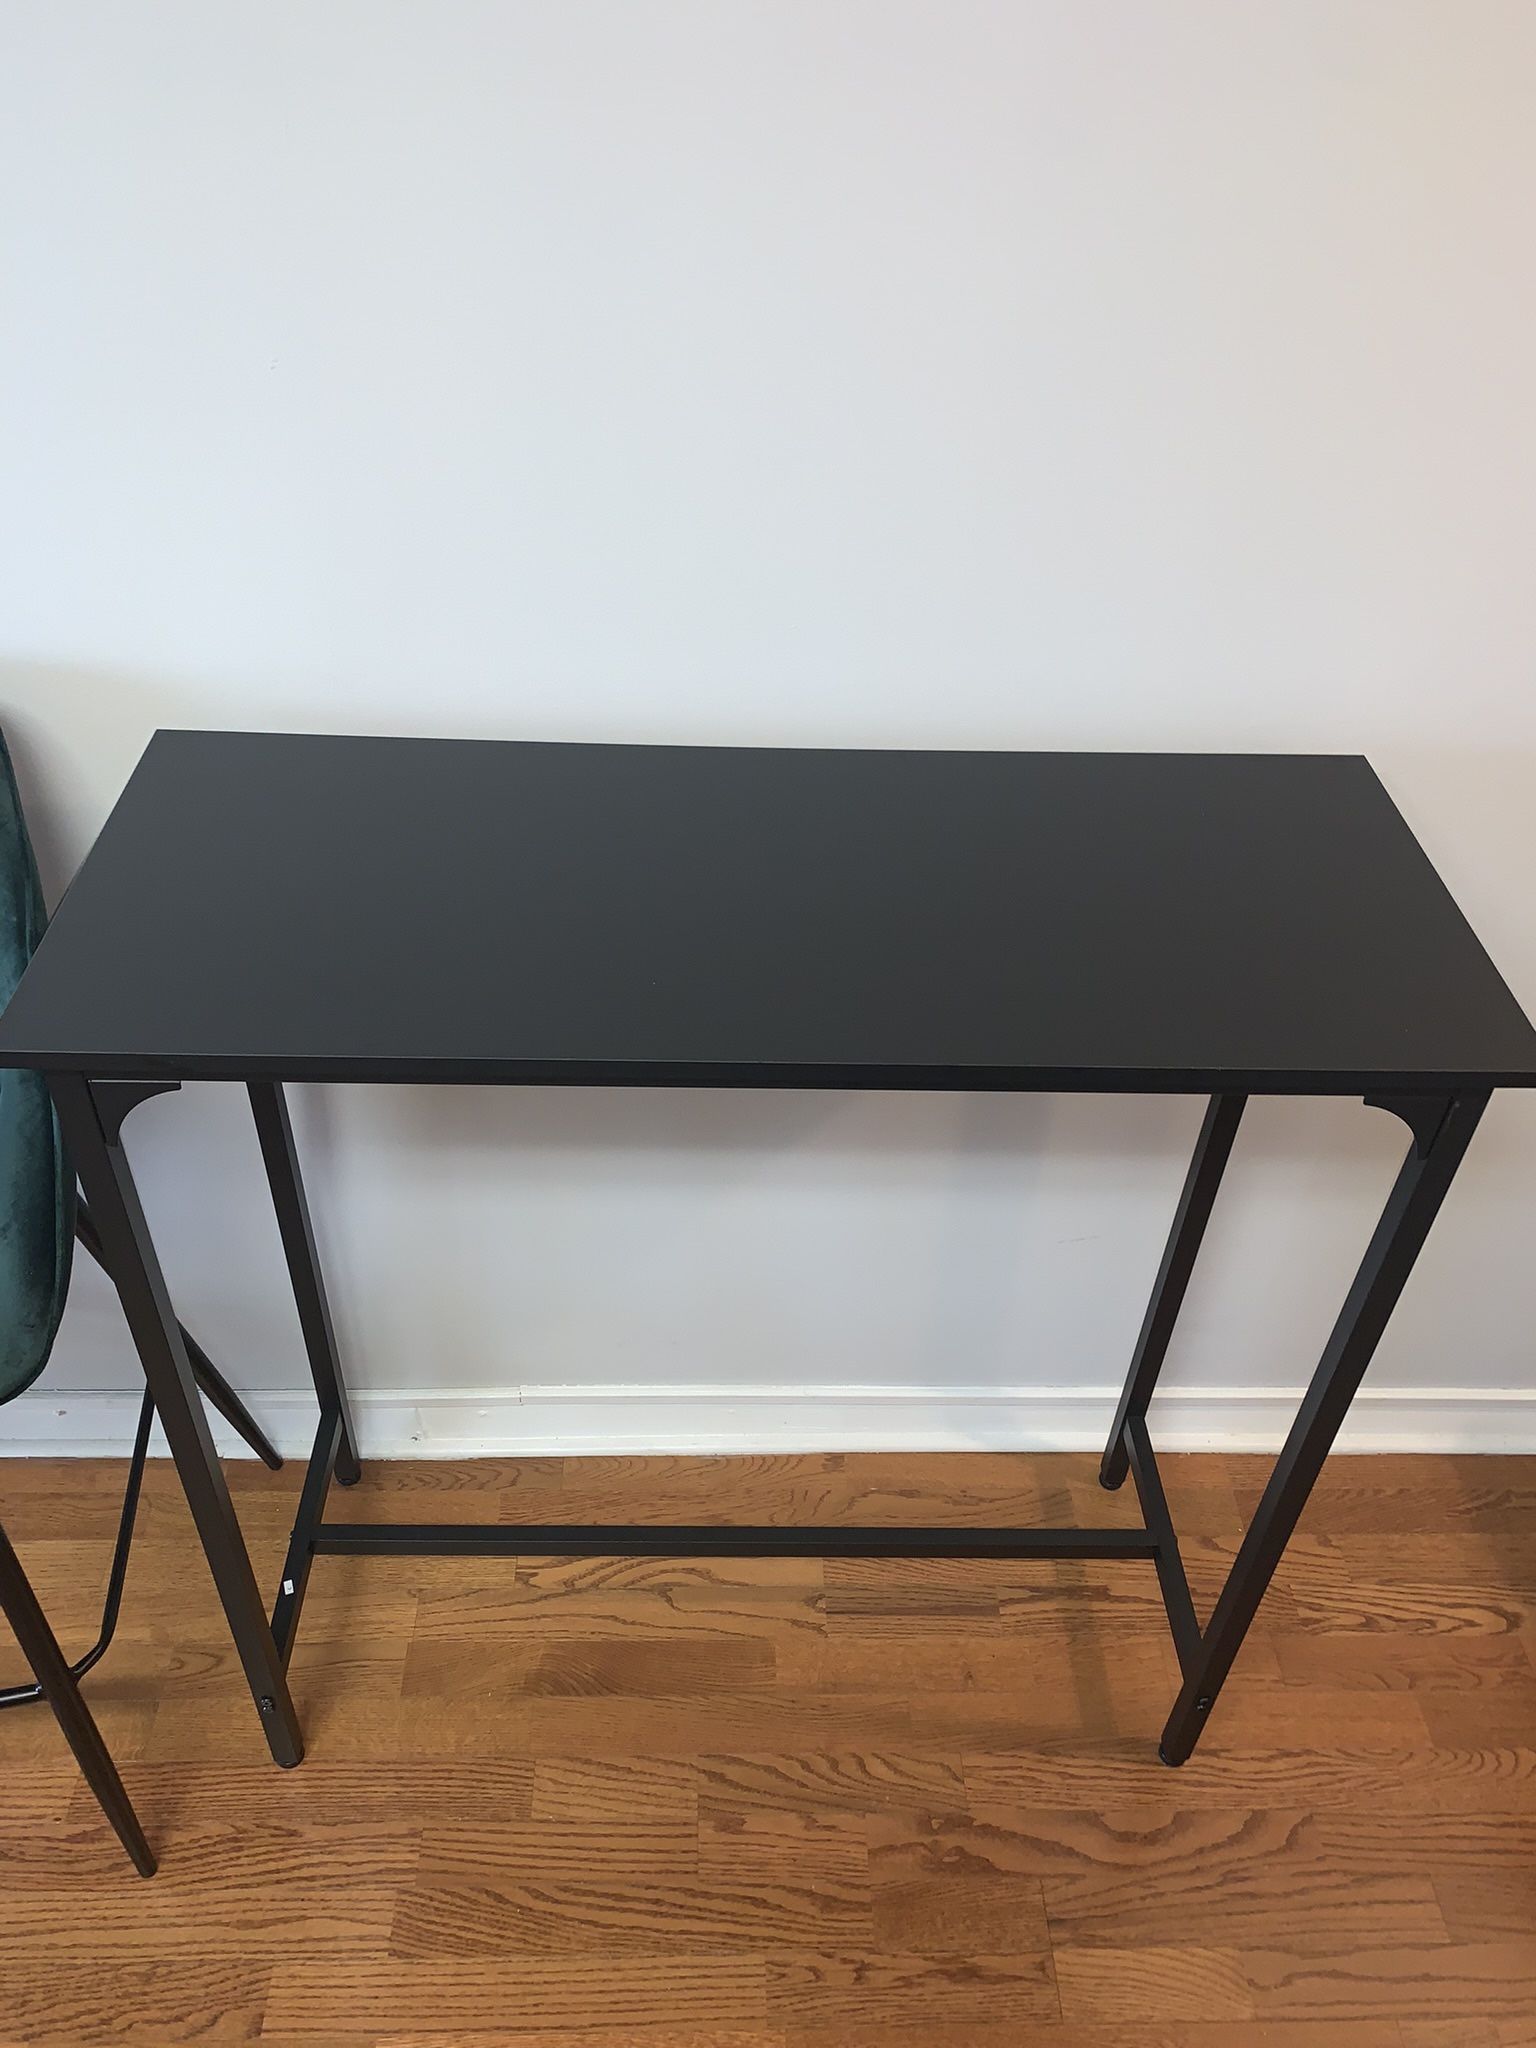 55” Table Slim / Bar table / Console table